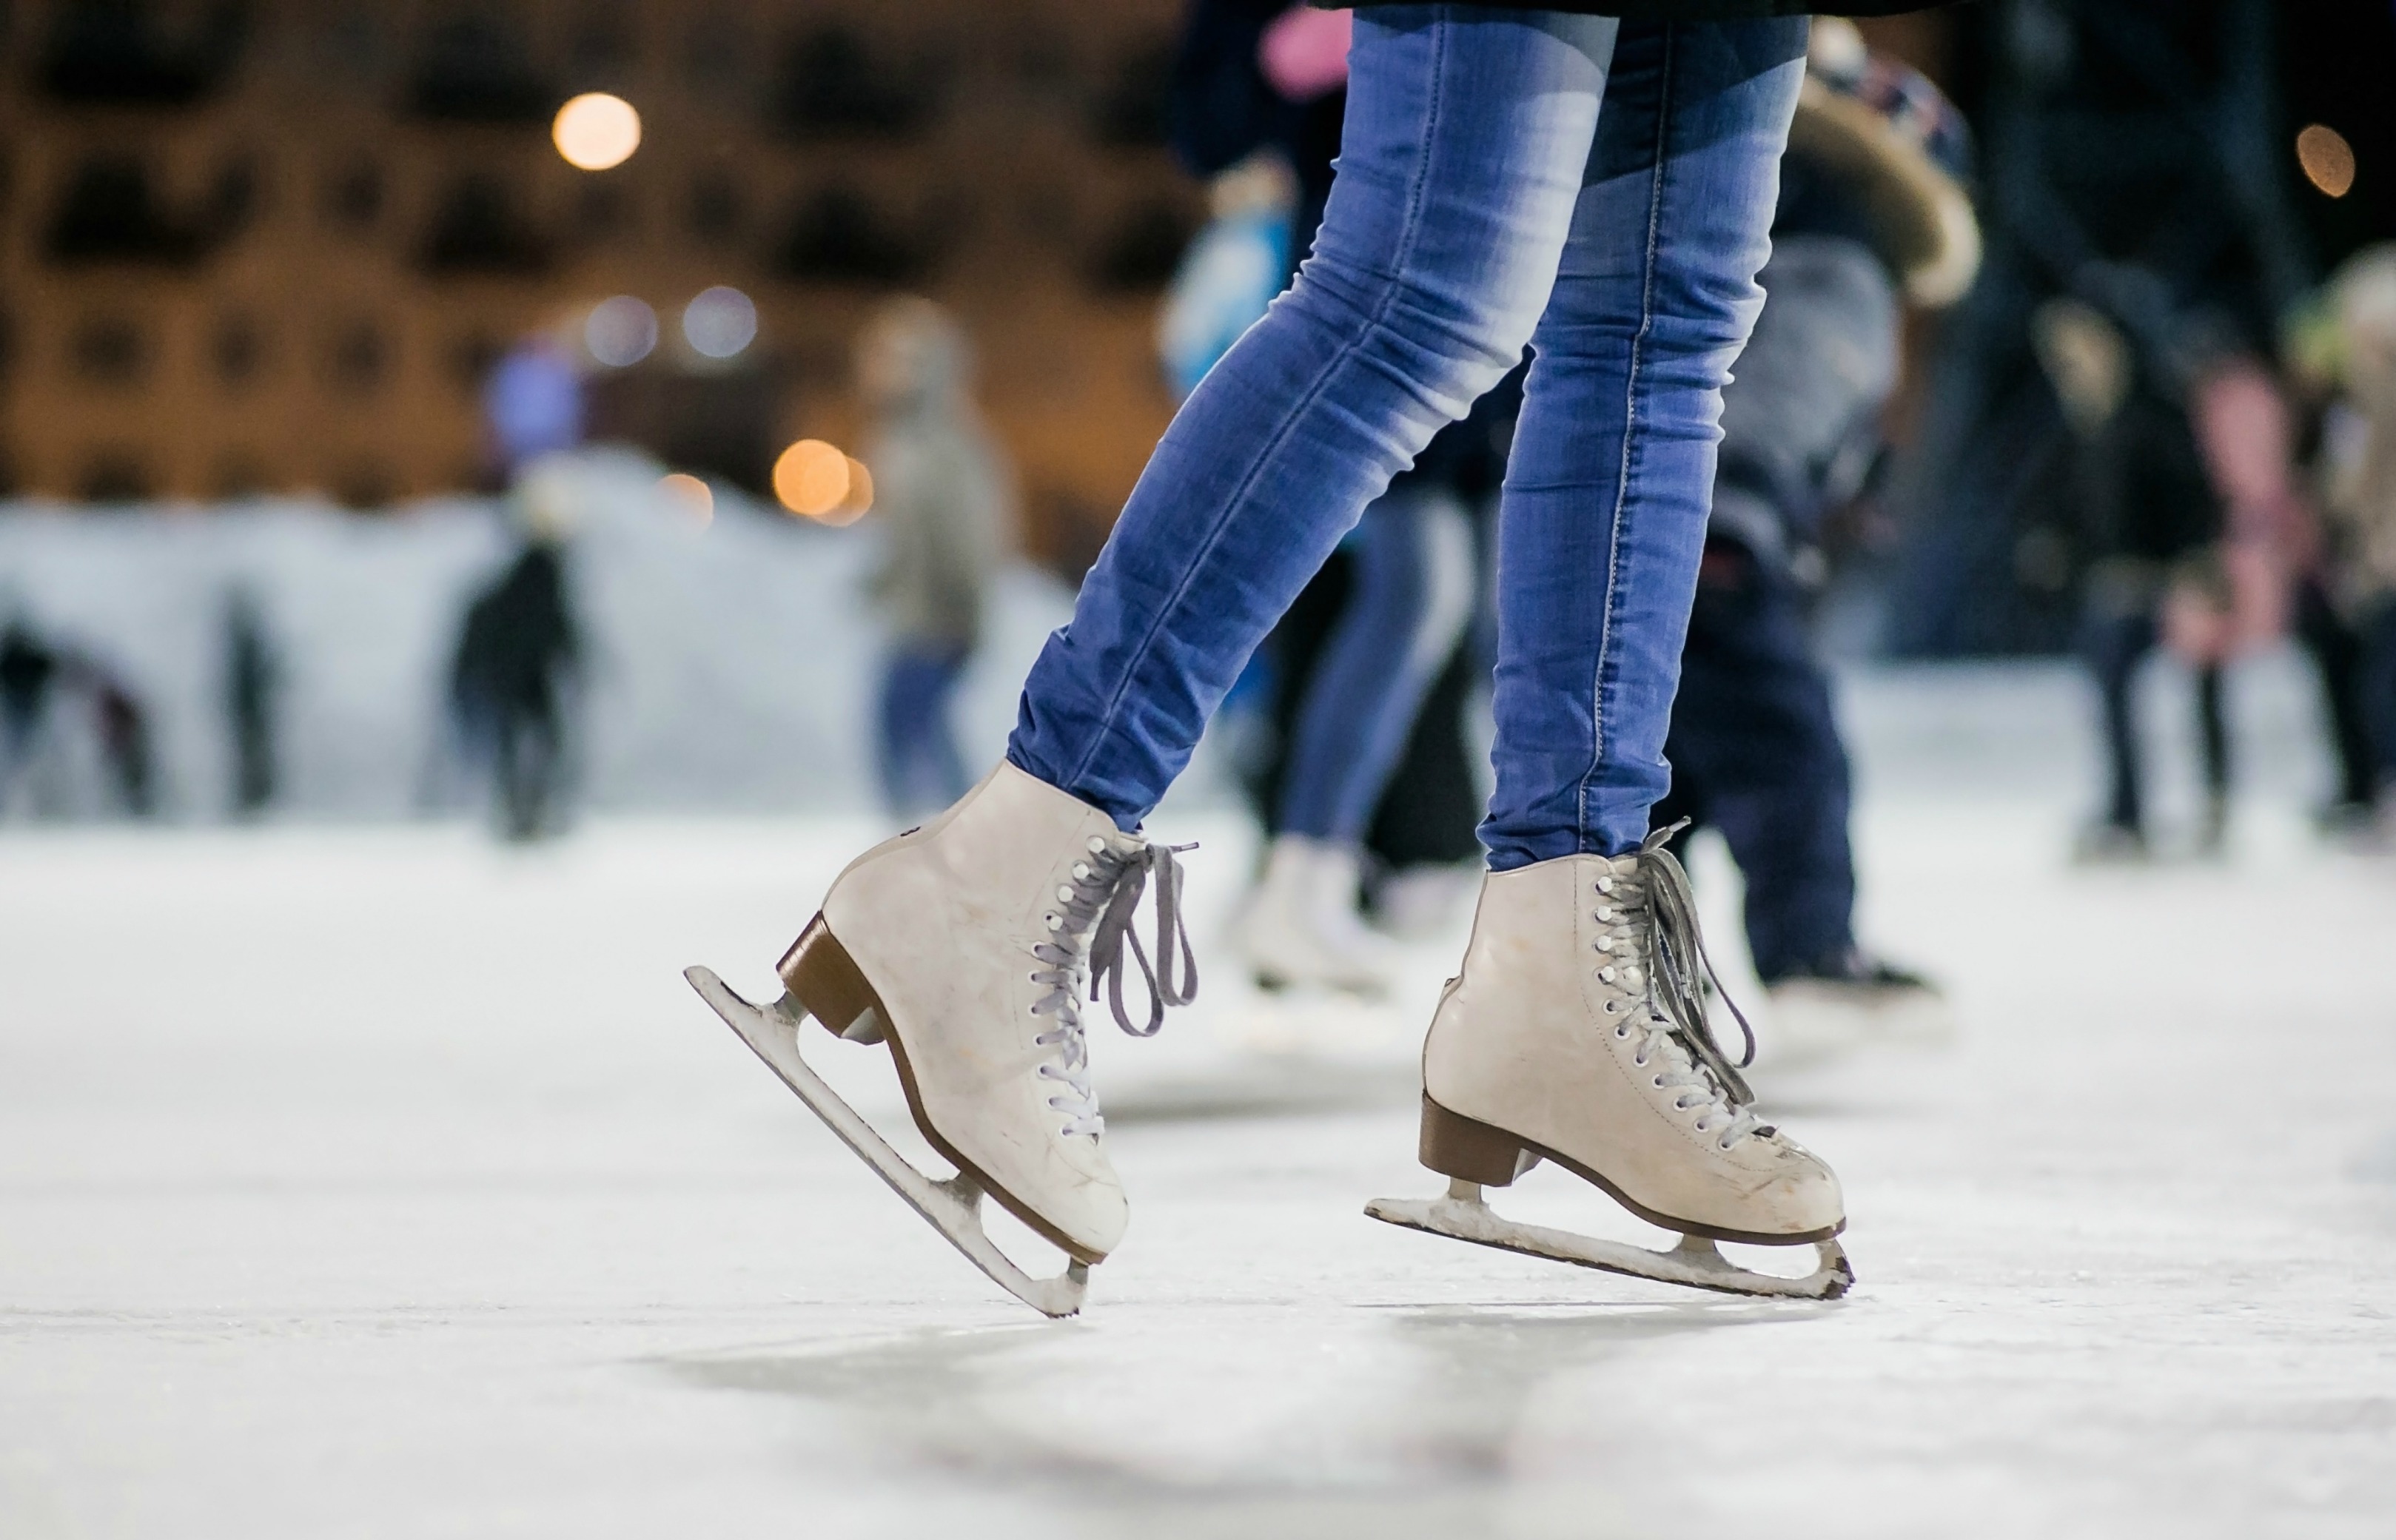 ❄⛸ Ice skating ⛸❄ – pt 2!